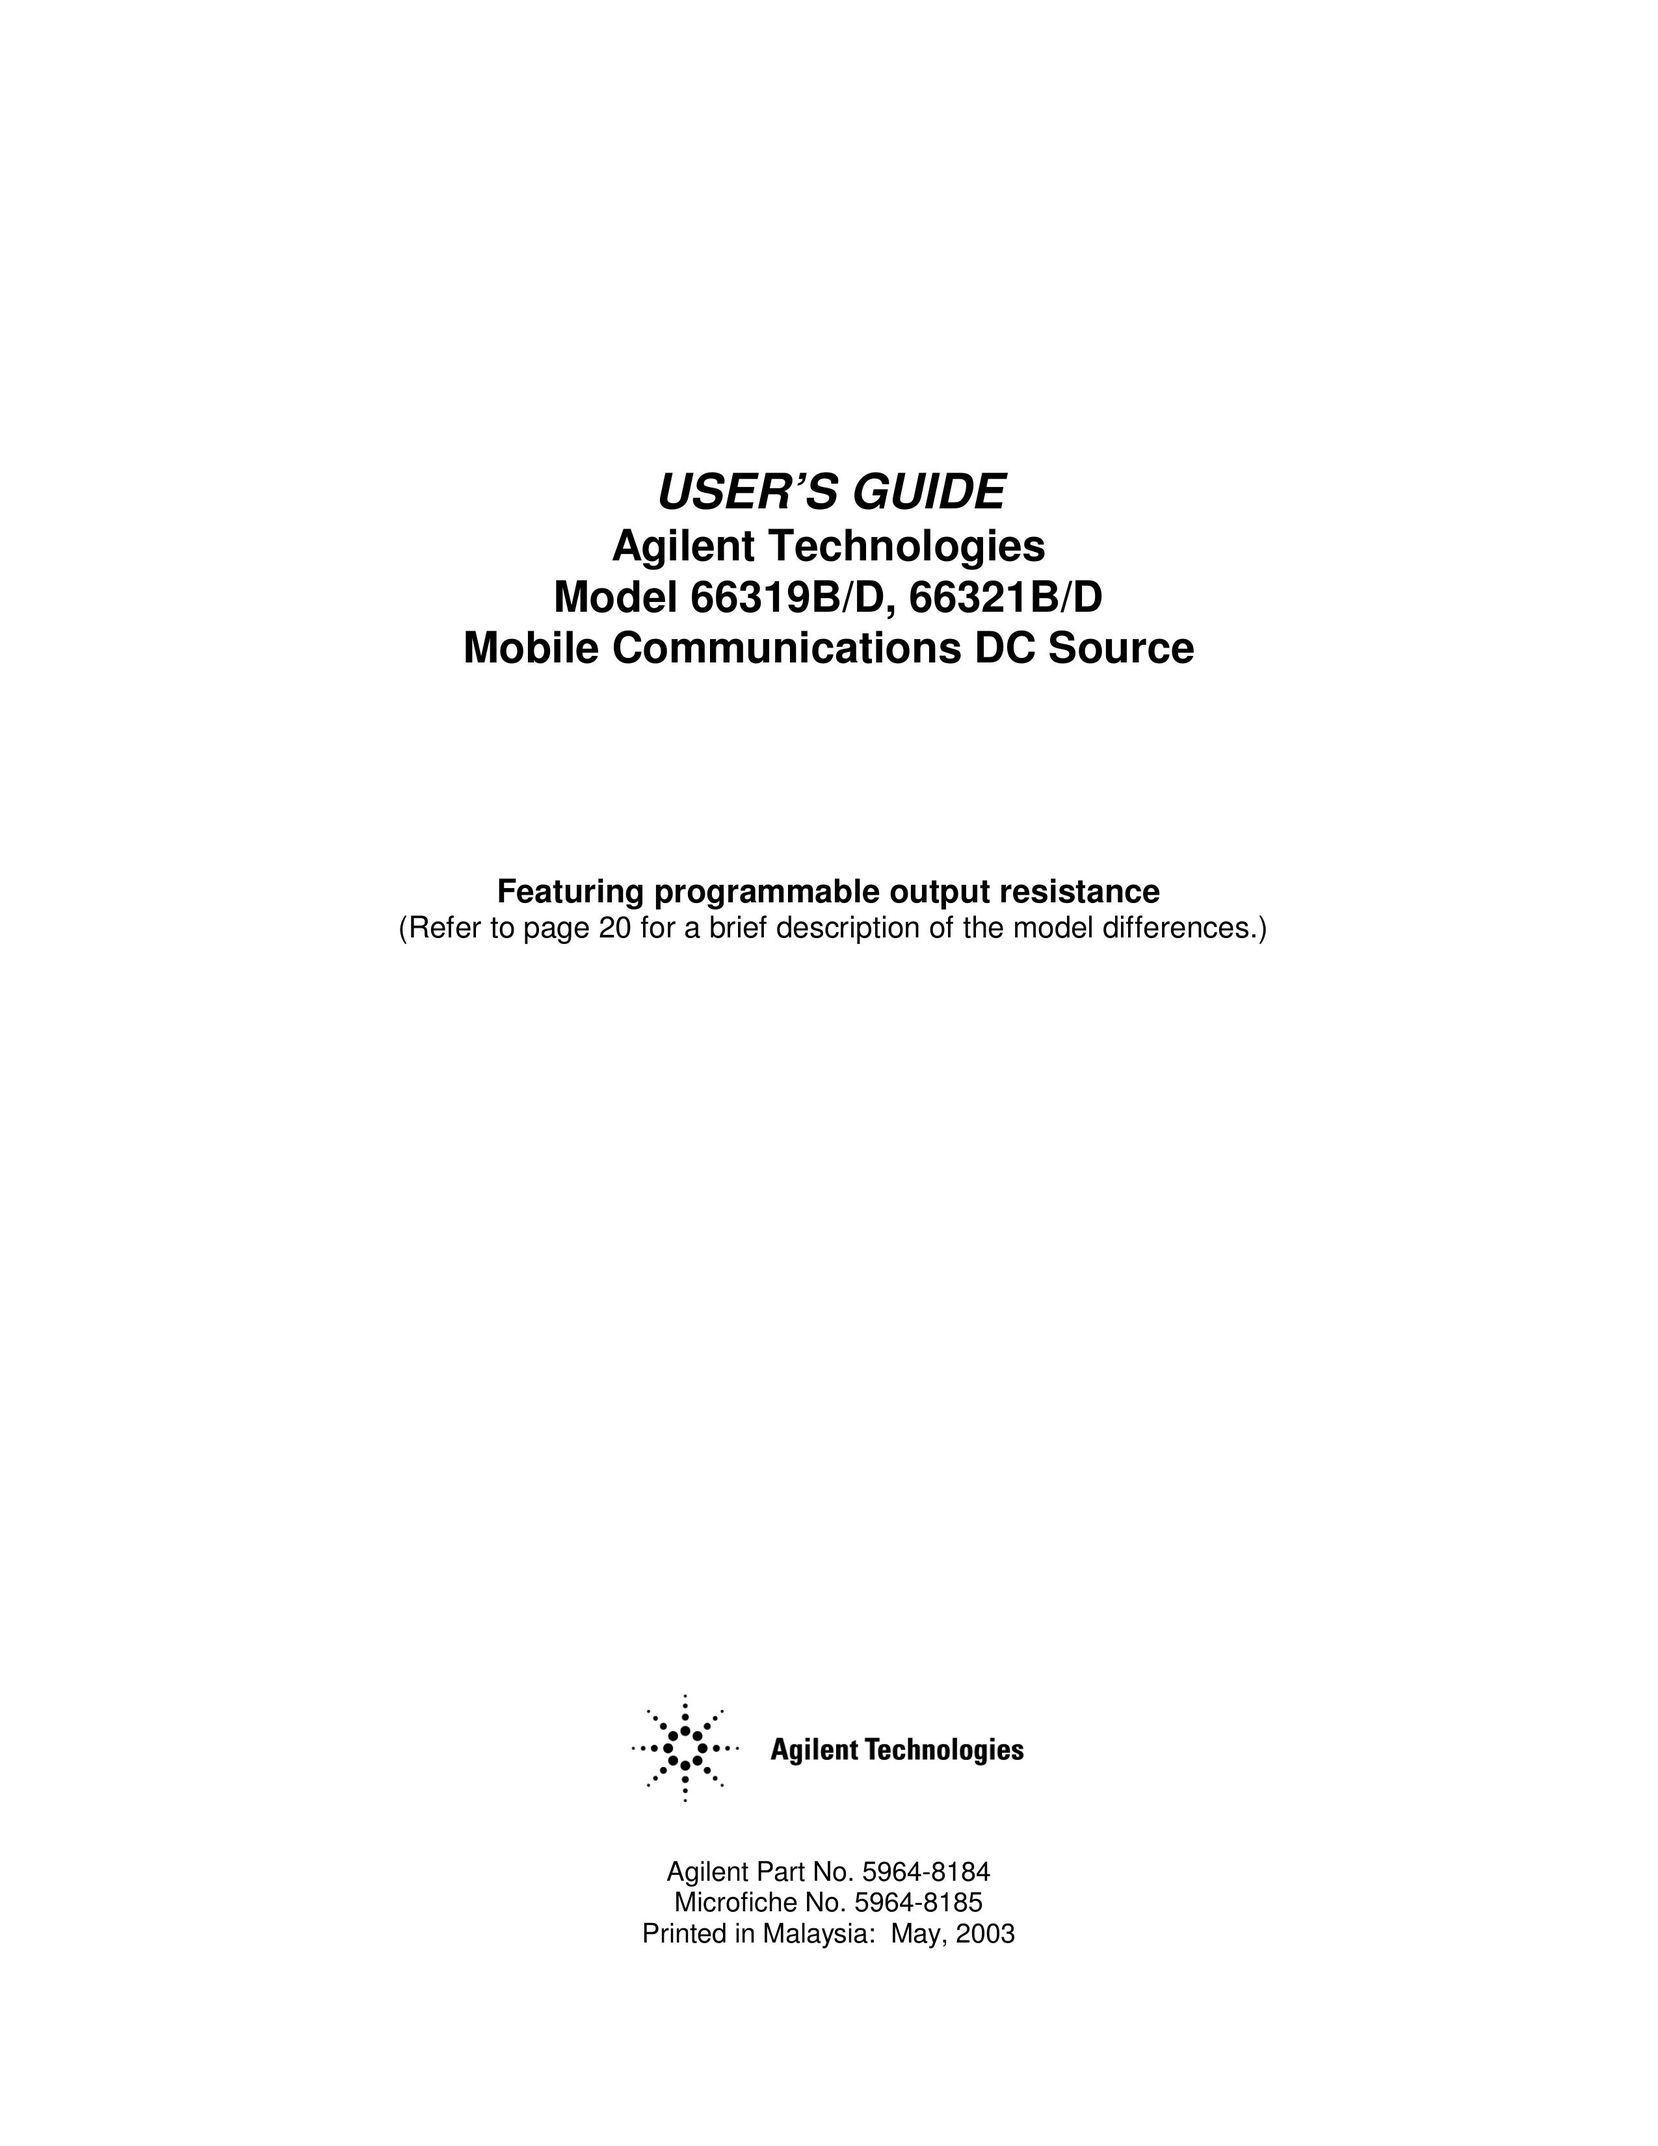 Agilent Technologies d Video Games User Manual